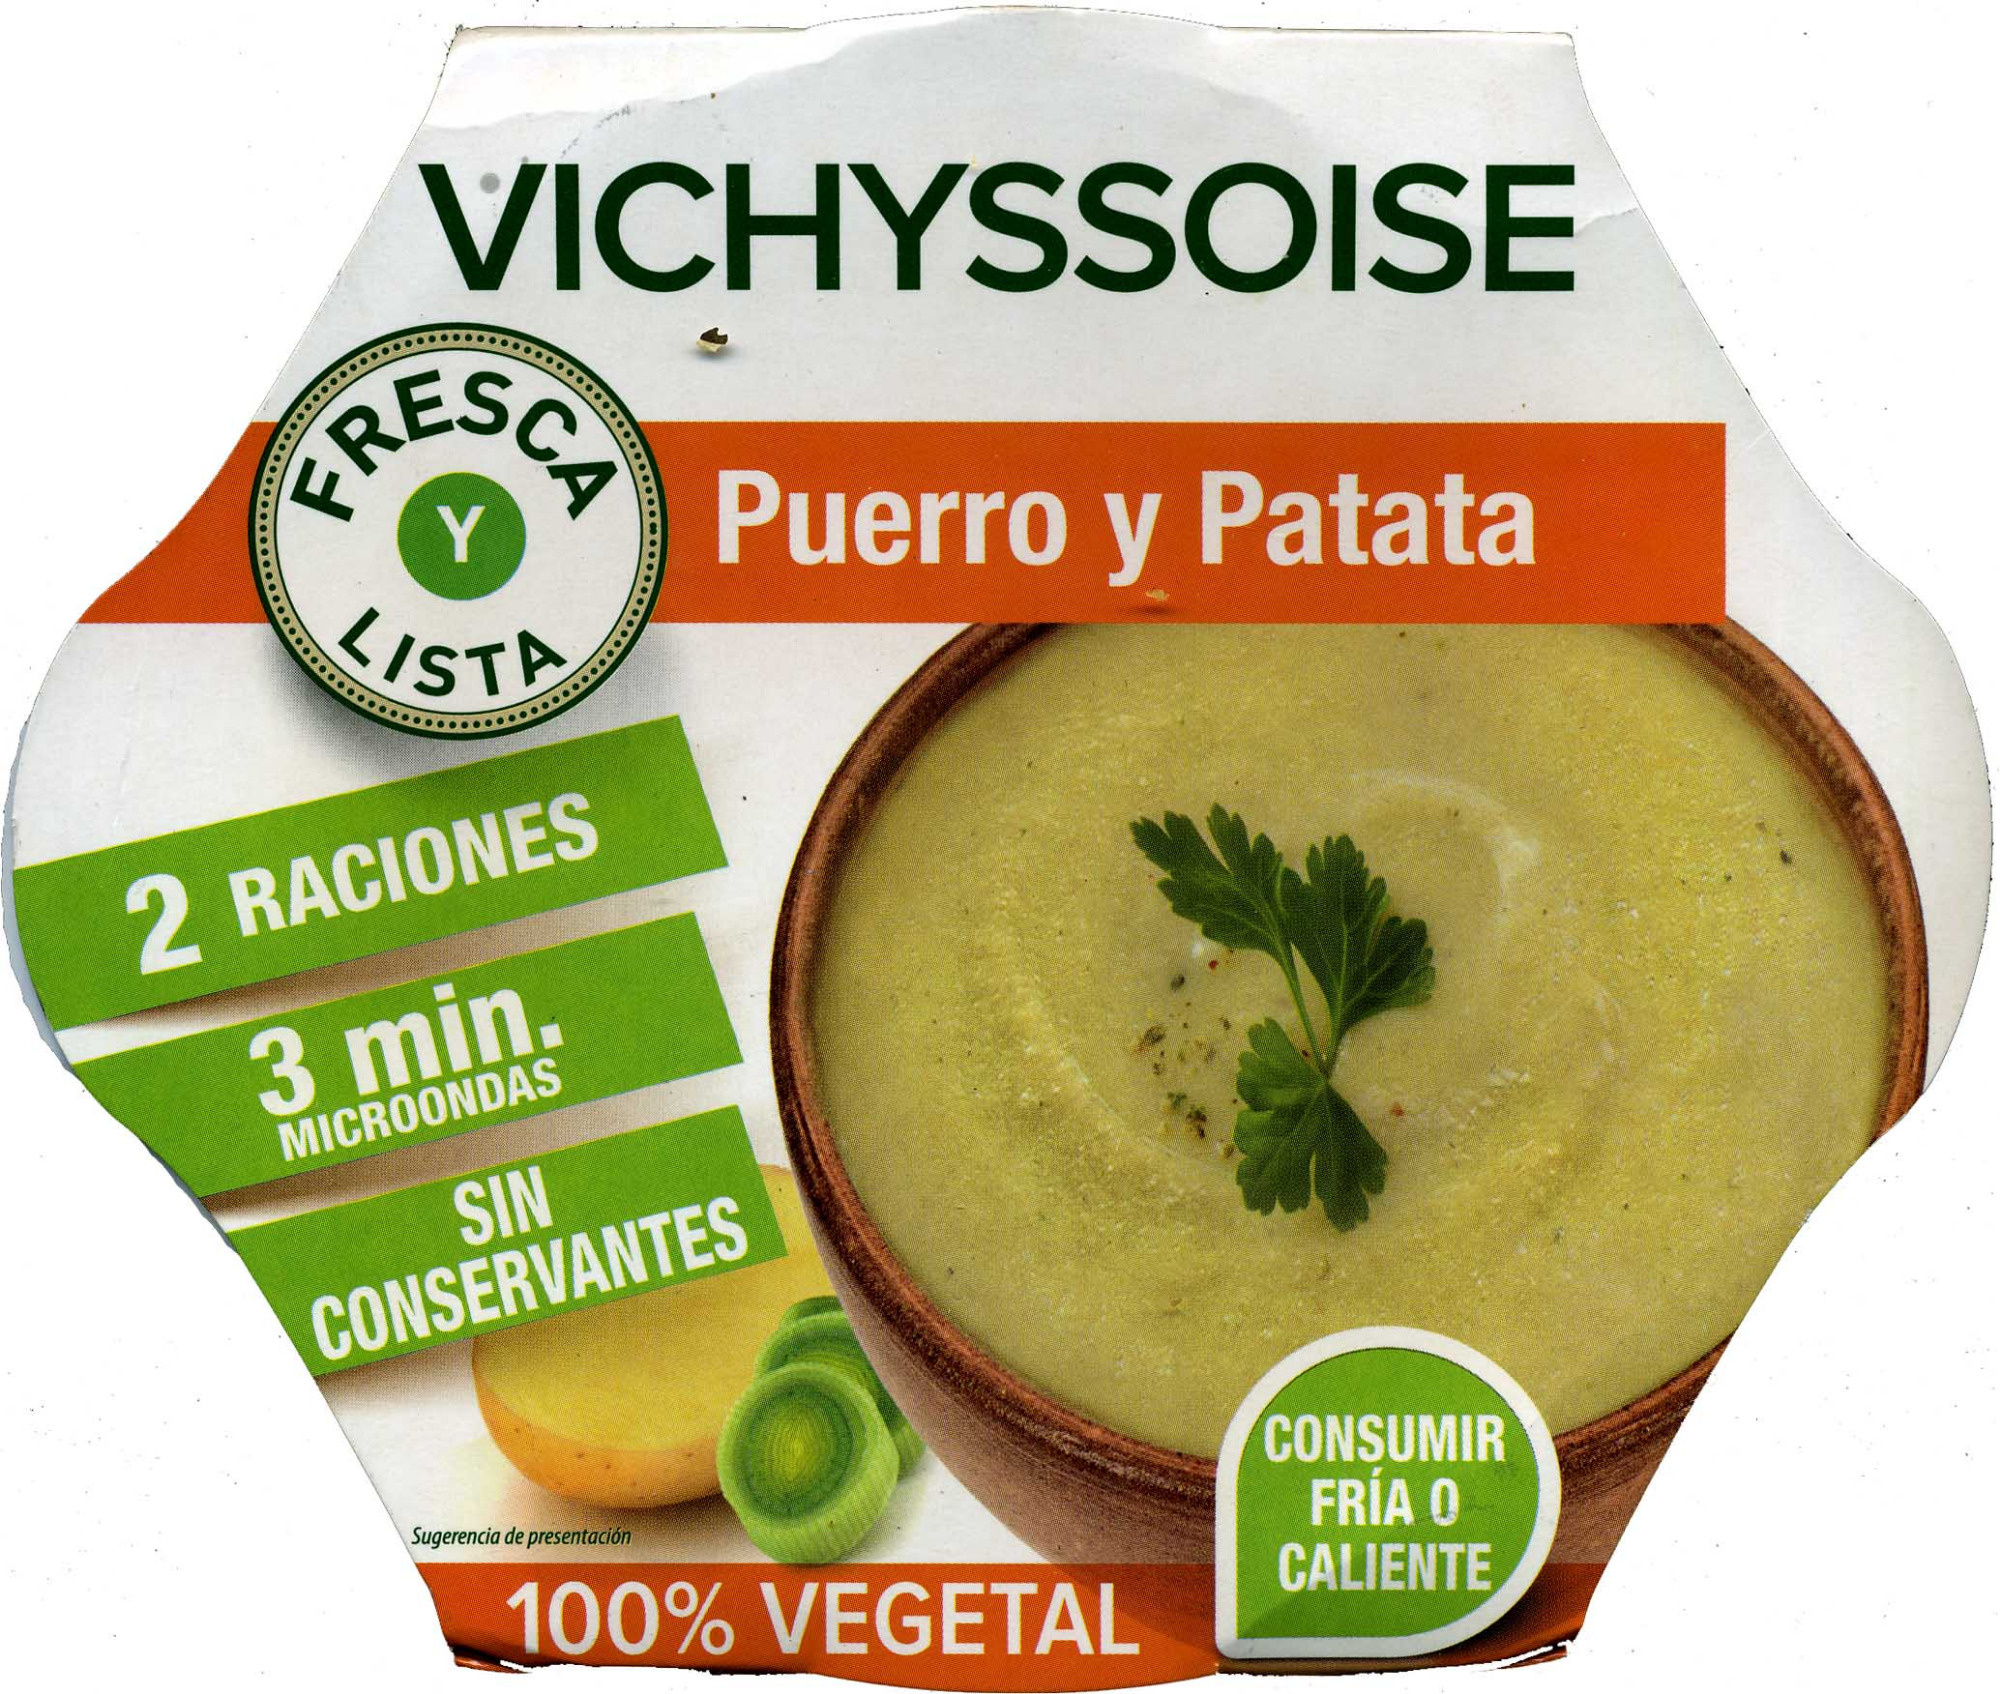 Vichyssoise Puerro y Patata - Product - es